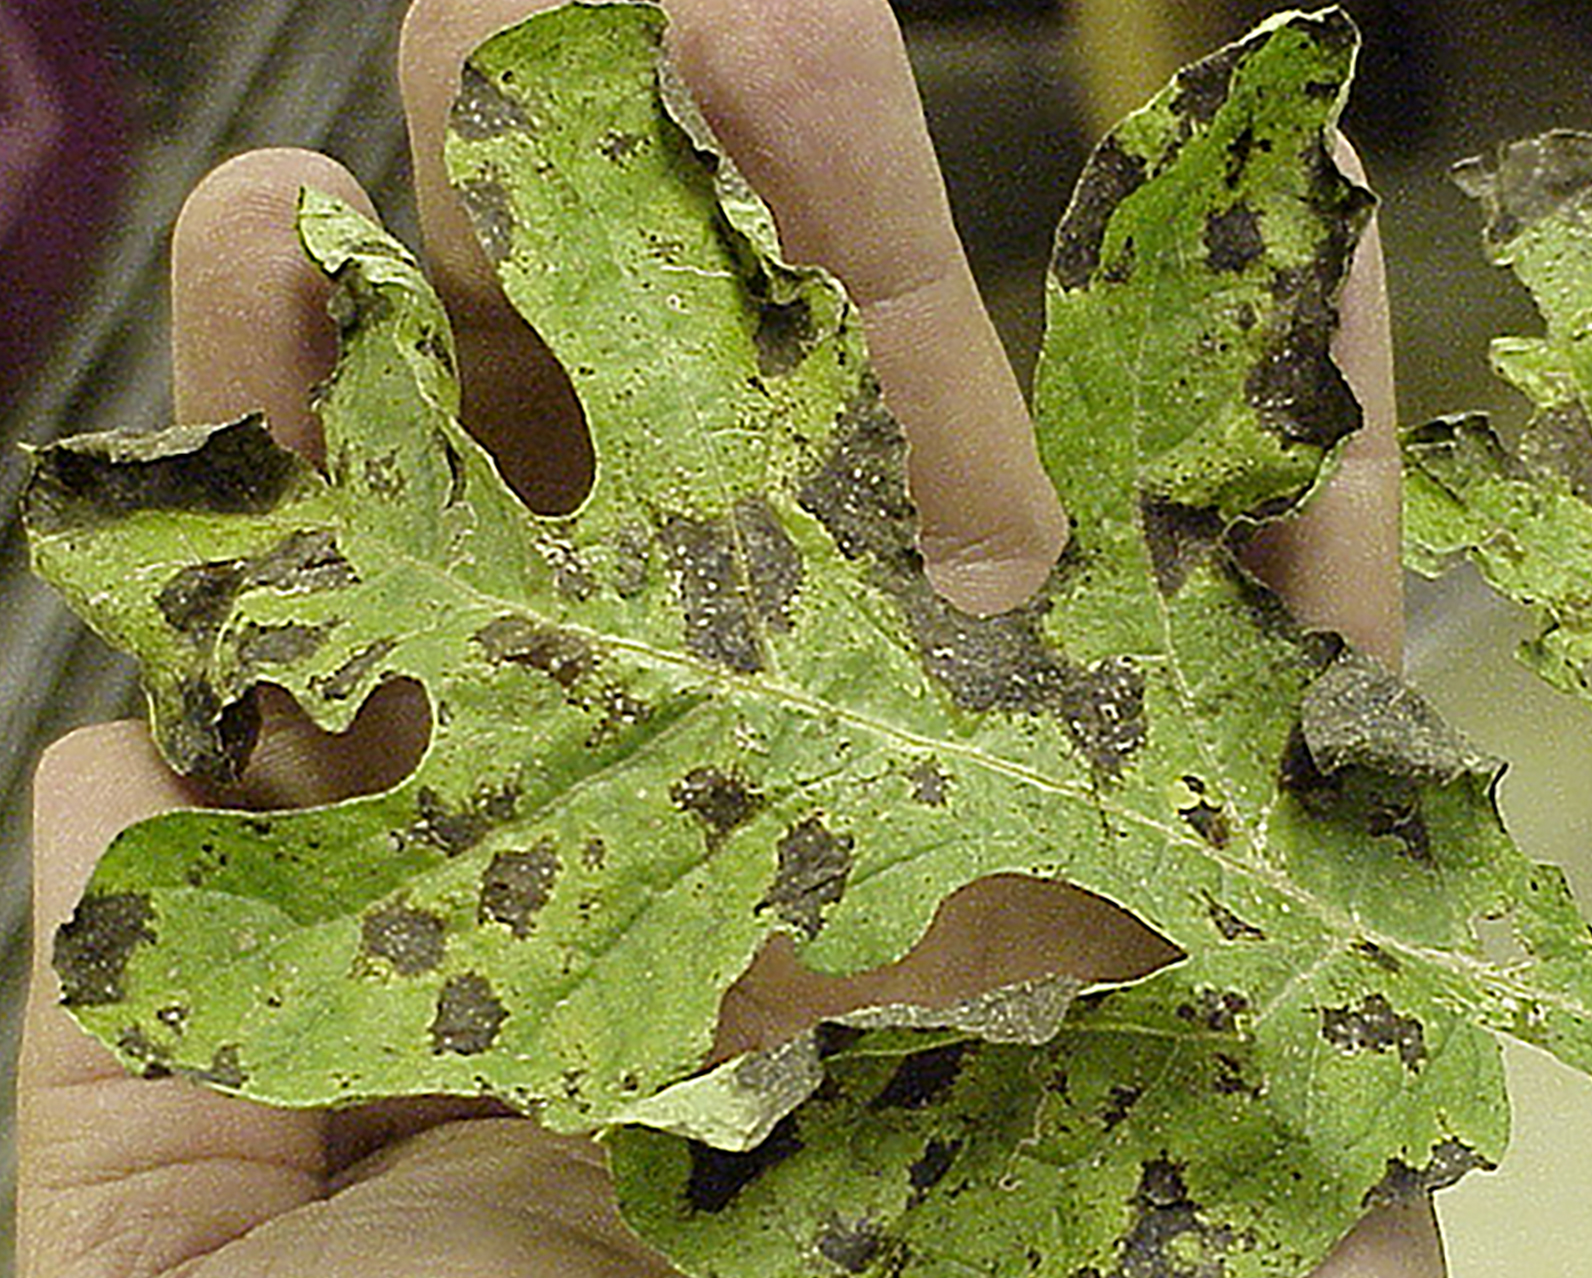 Downy mildew disease on a watermelon leaf.